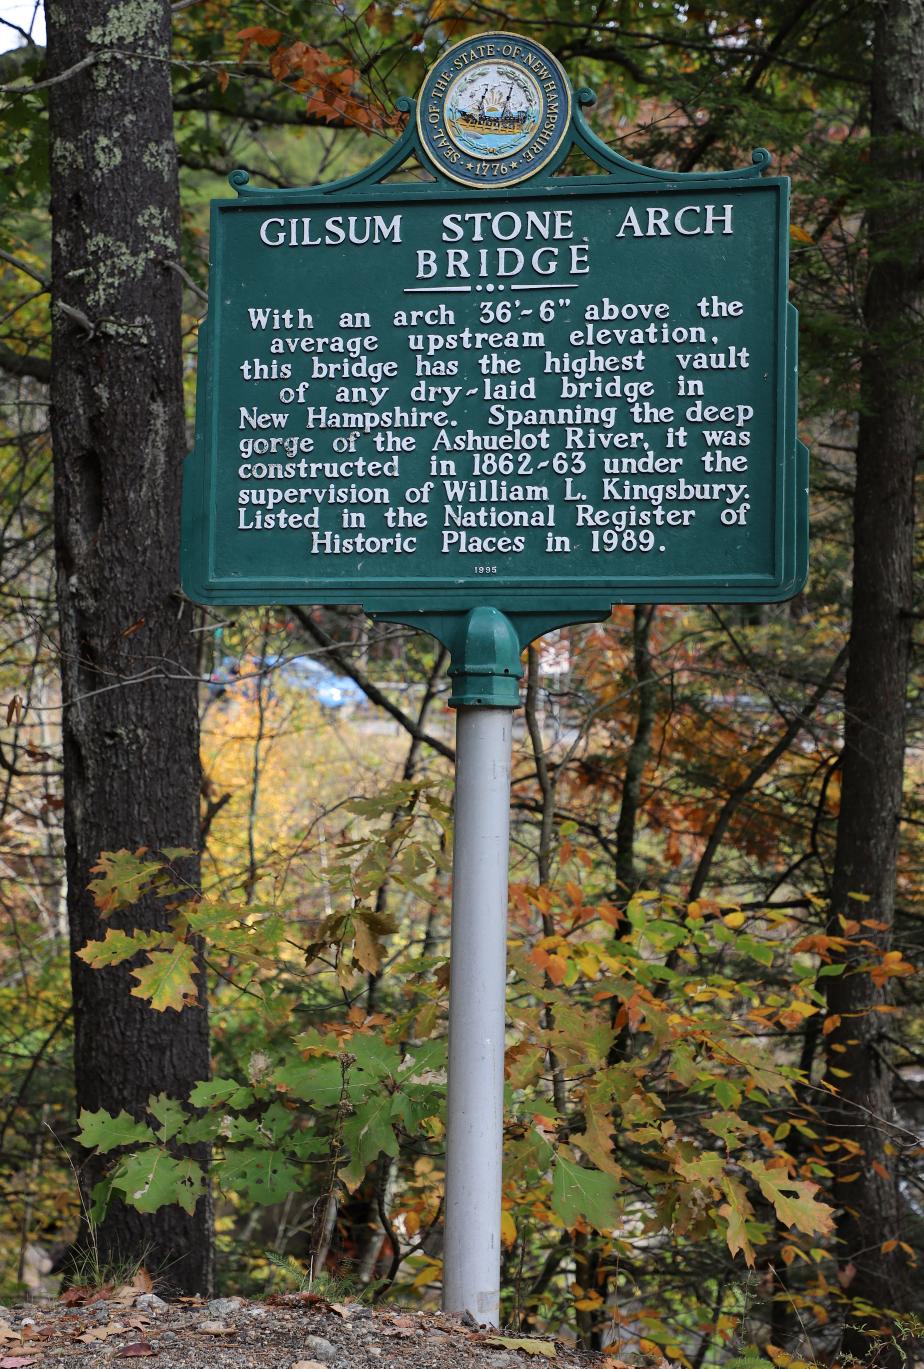 Gilsum Stone Arch Bridge Historical Marker